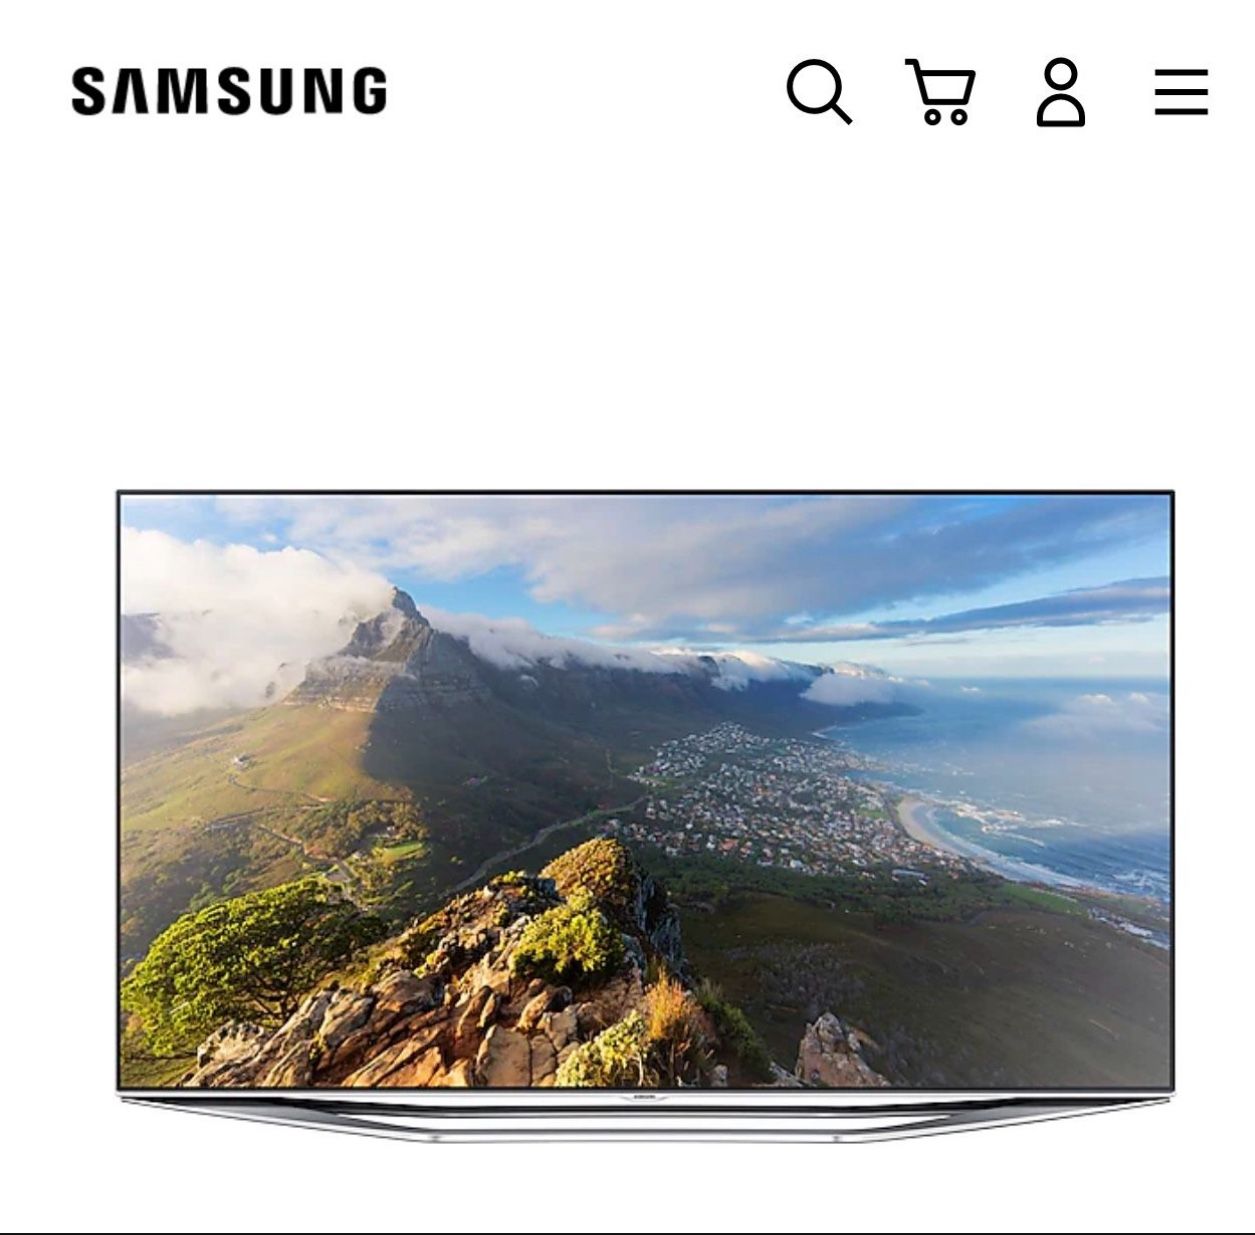 Samsung 60 inch LED TV!!